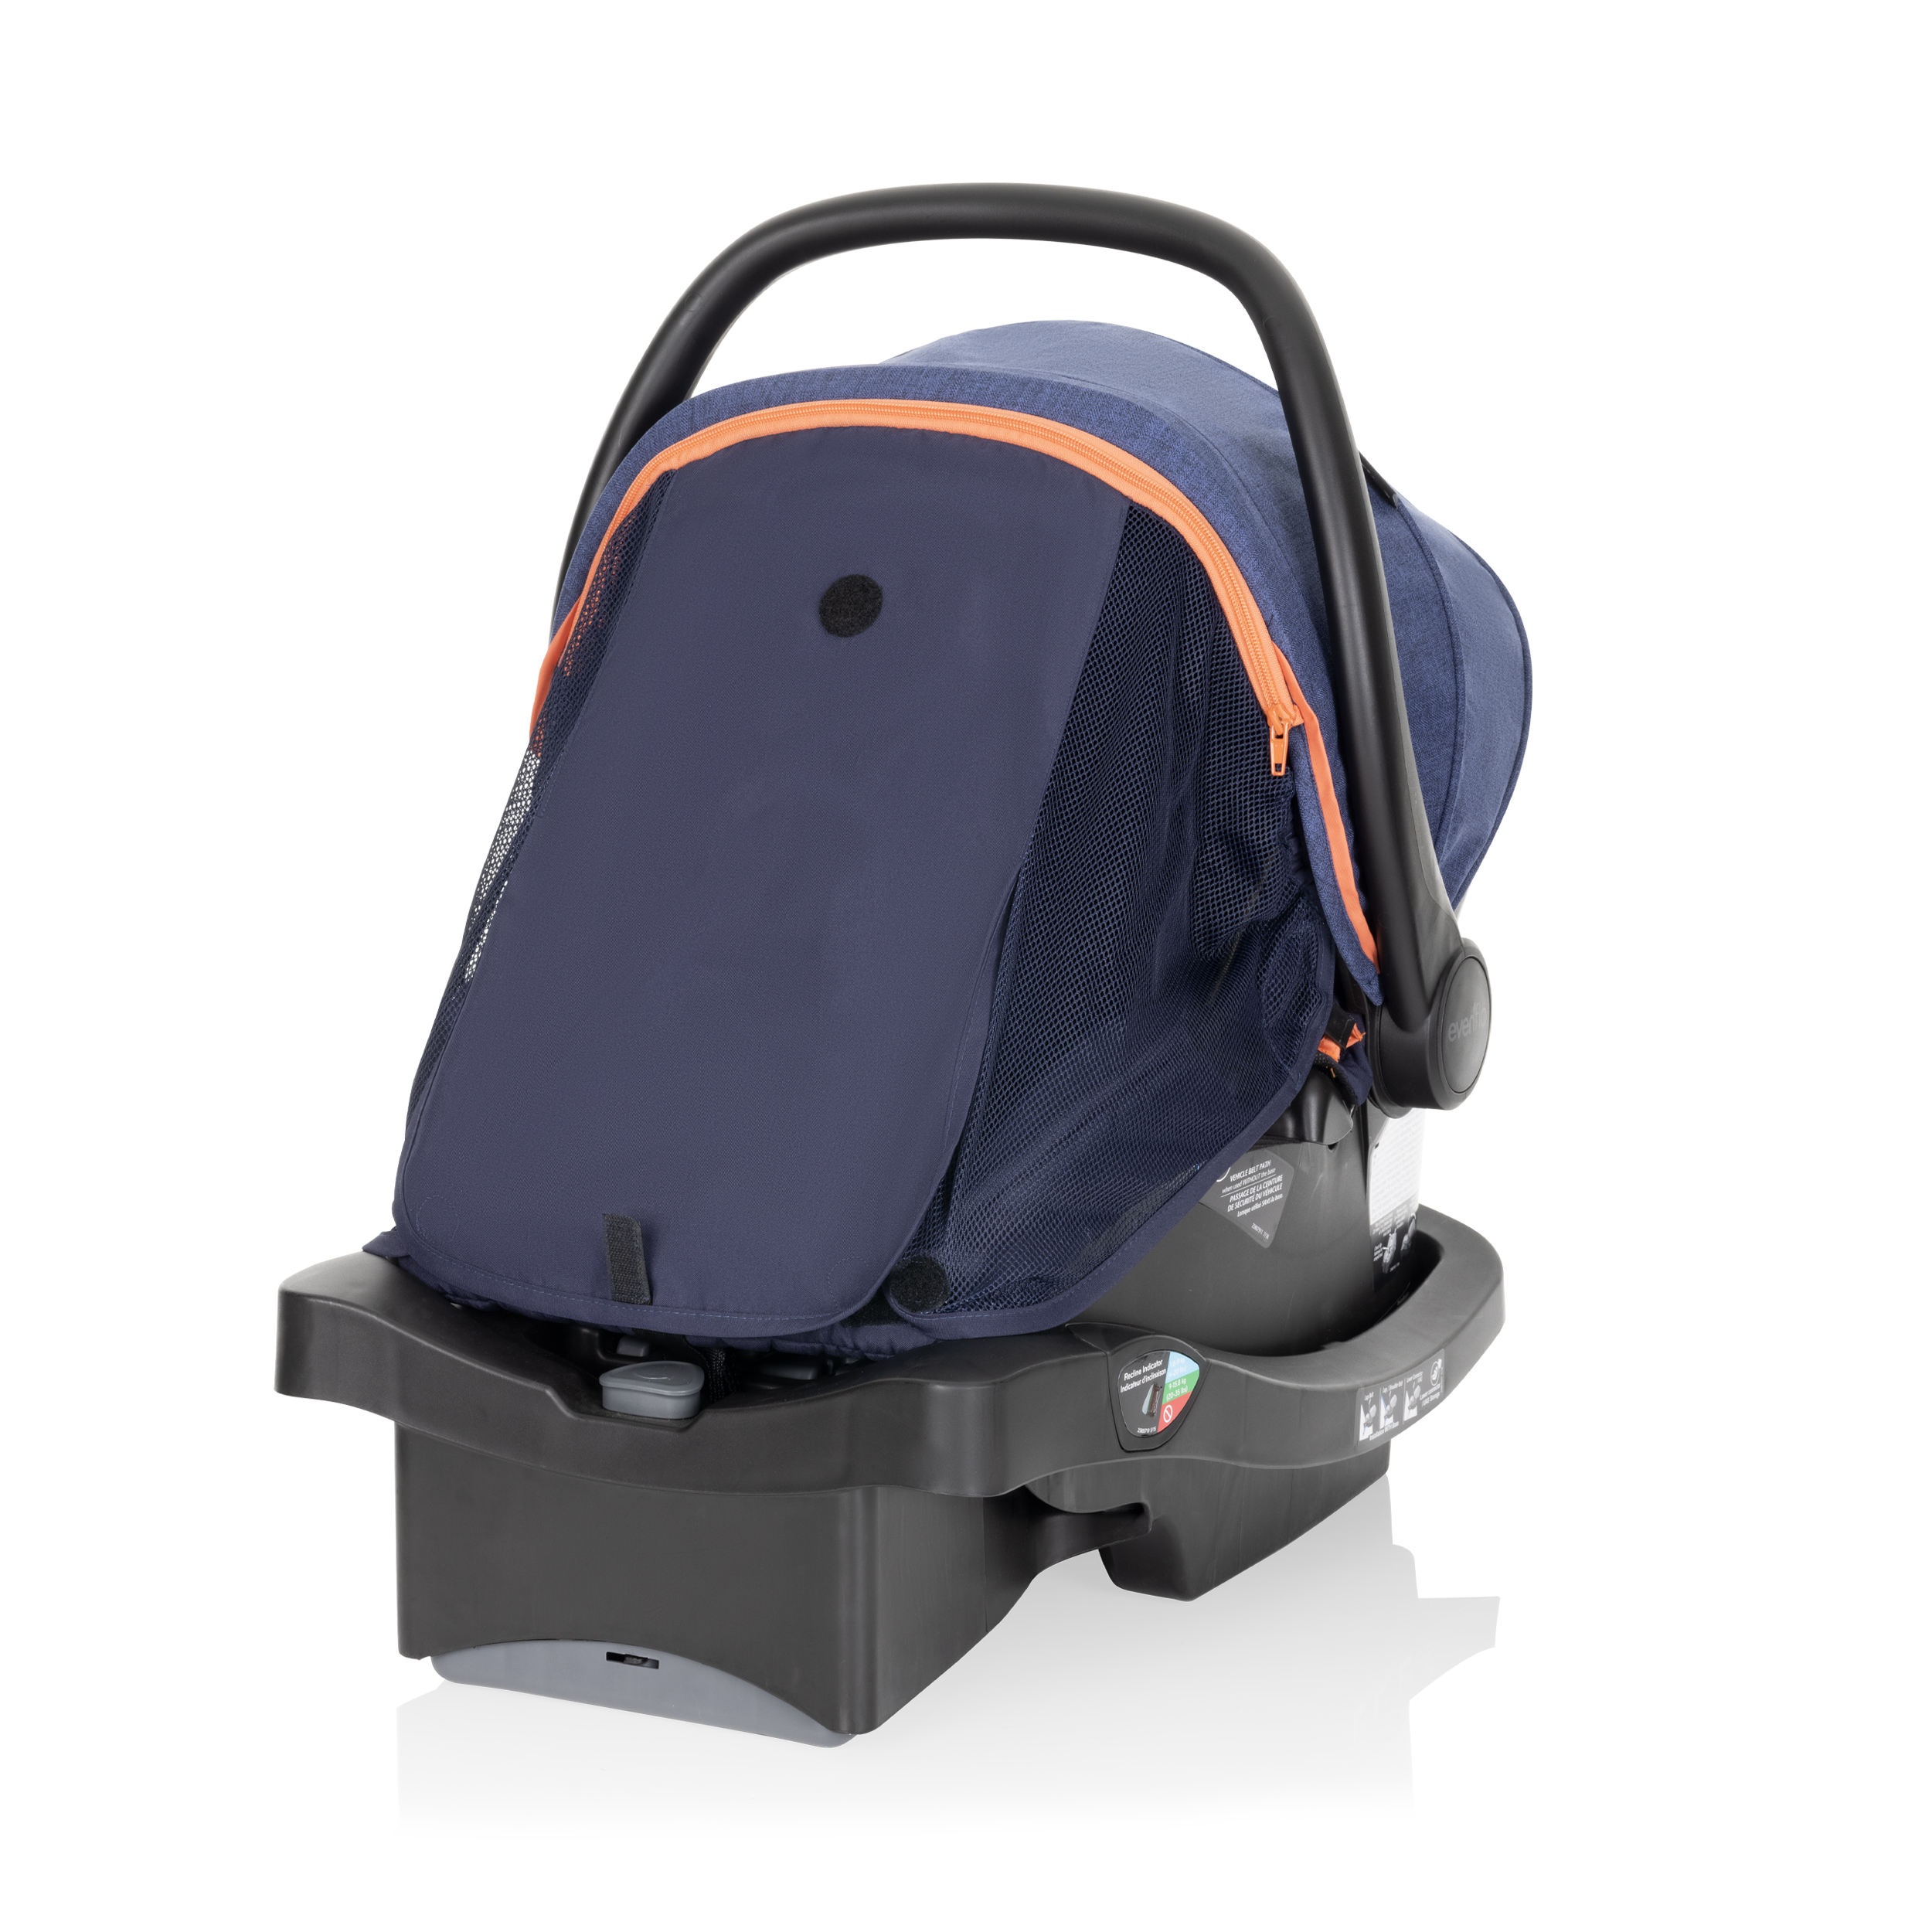 Pivot Vizor Travel System with LiteMax Infant Car Seat (Promenade Blue) - image 4 of 6